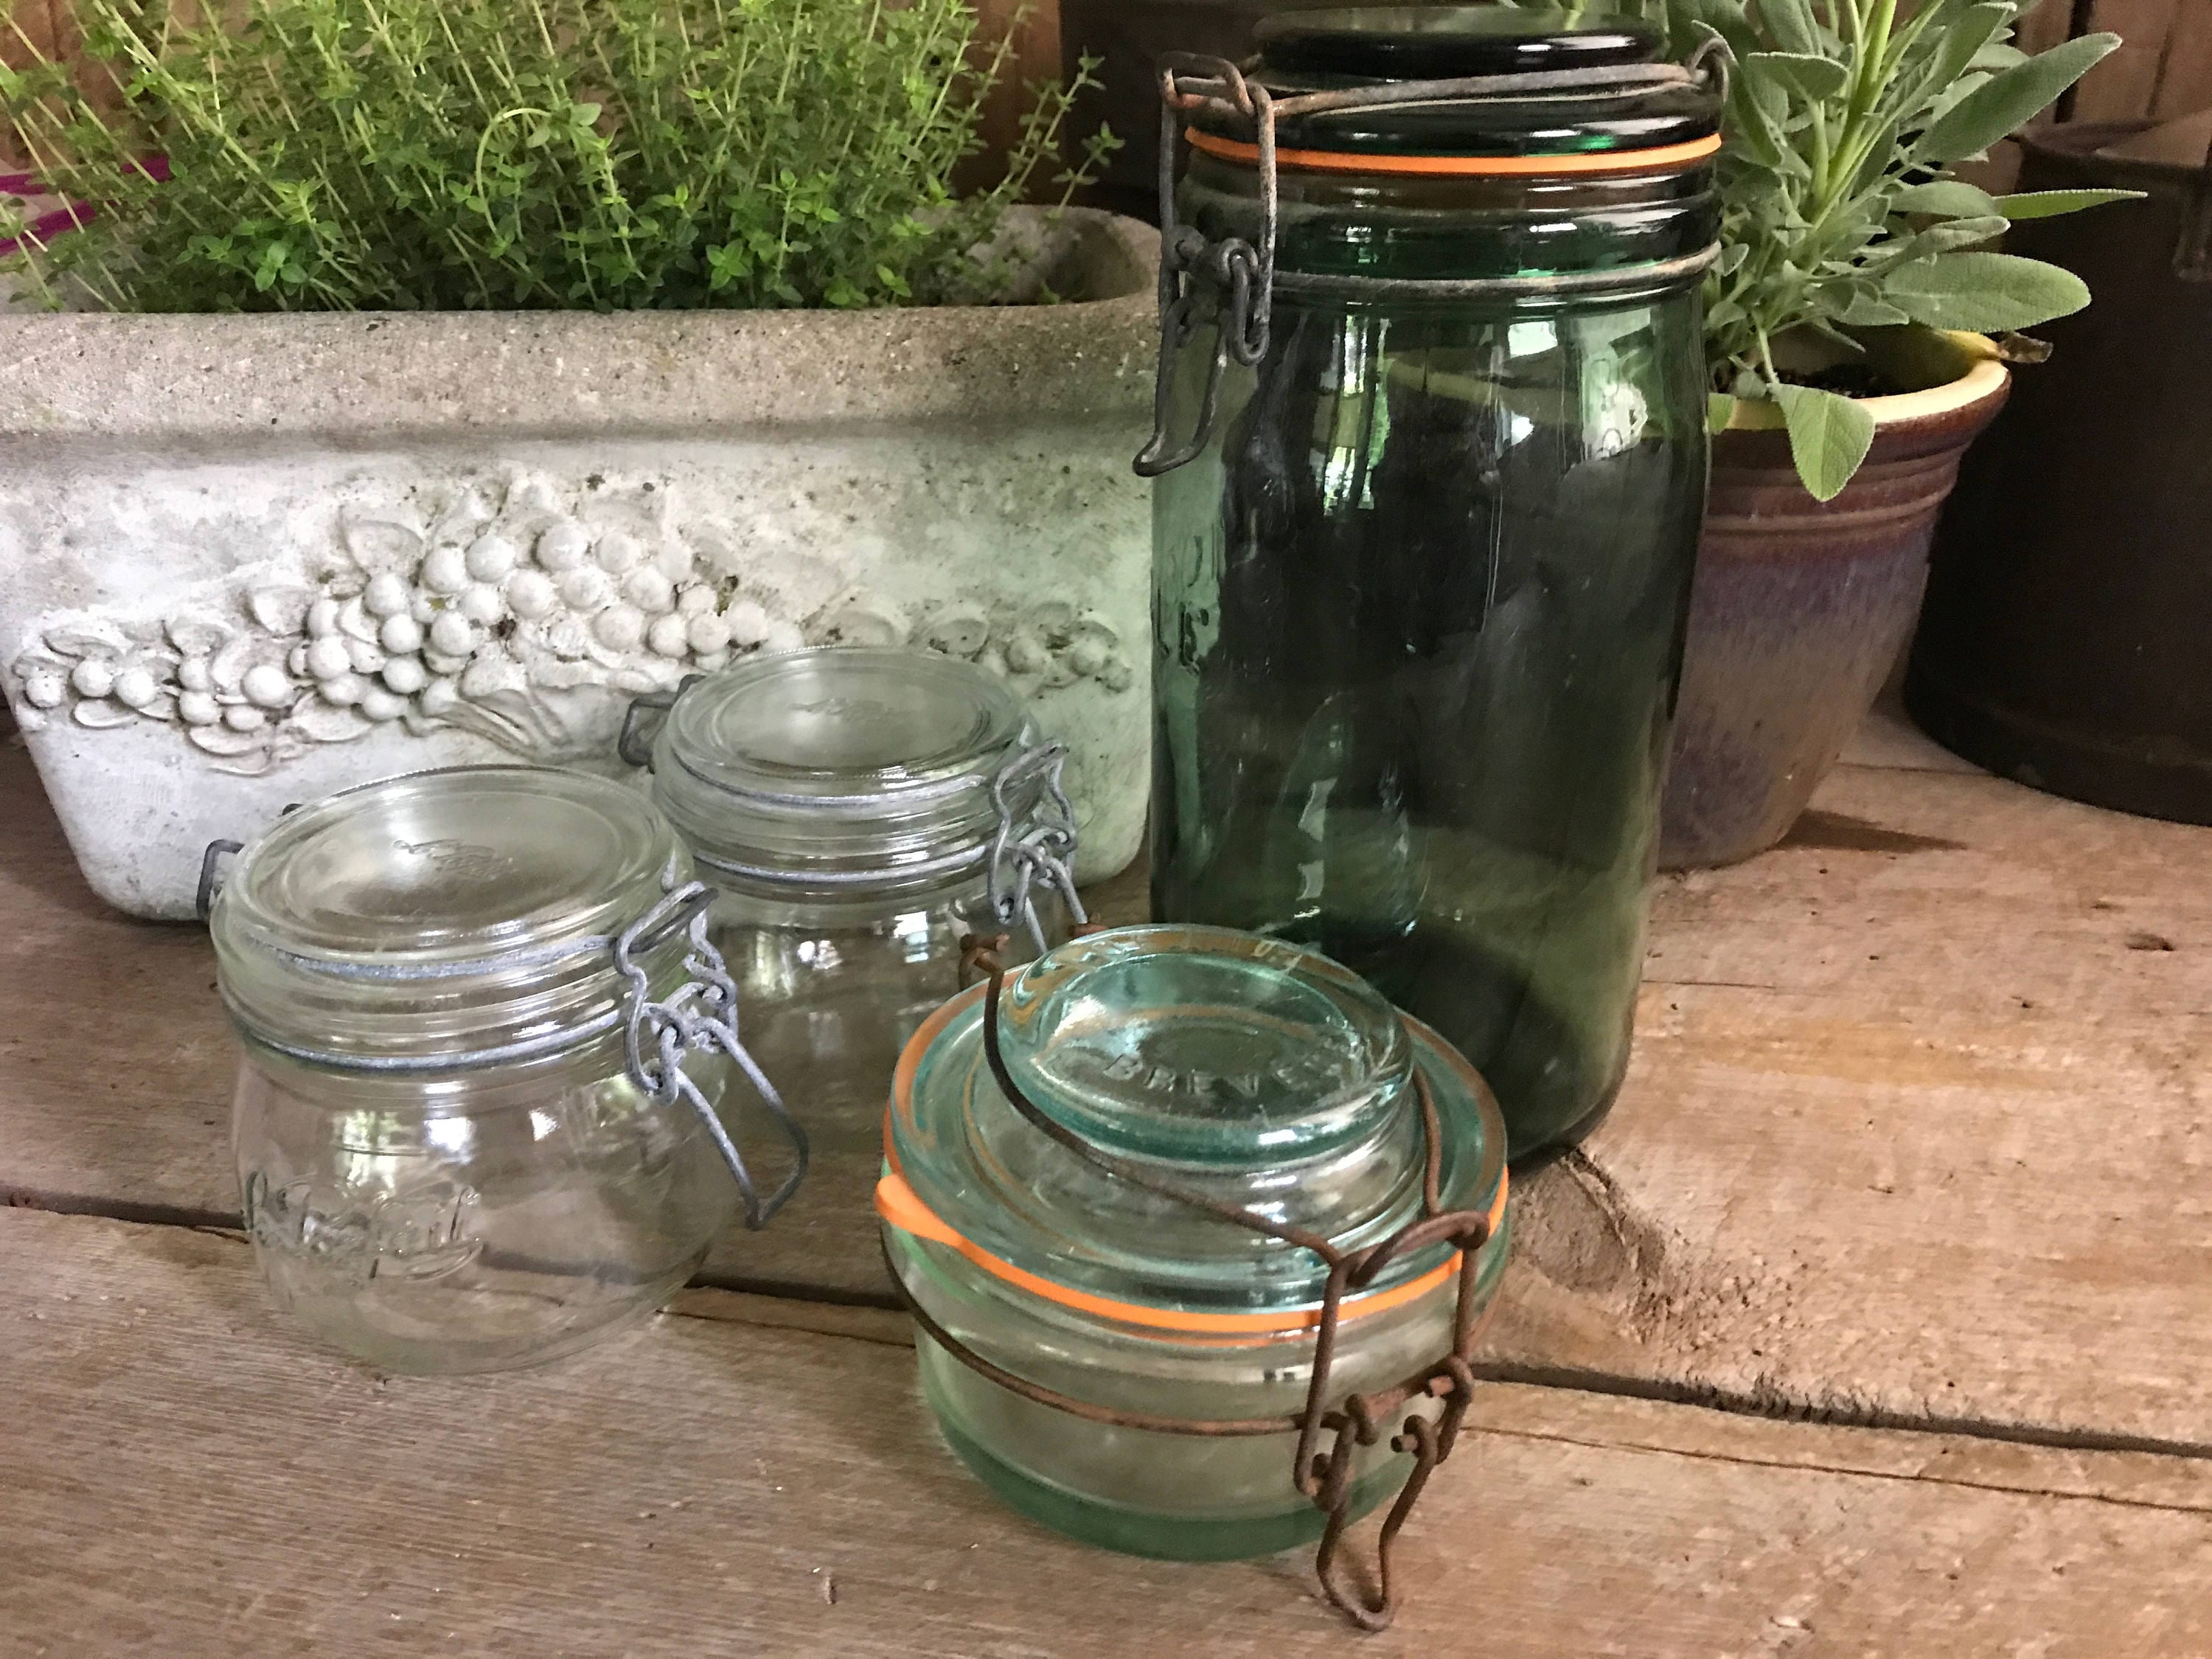 Pair of large glass jars with lids - 1950's – Chez Pluie